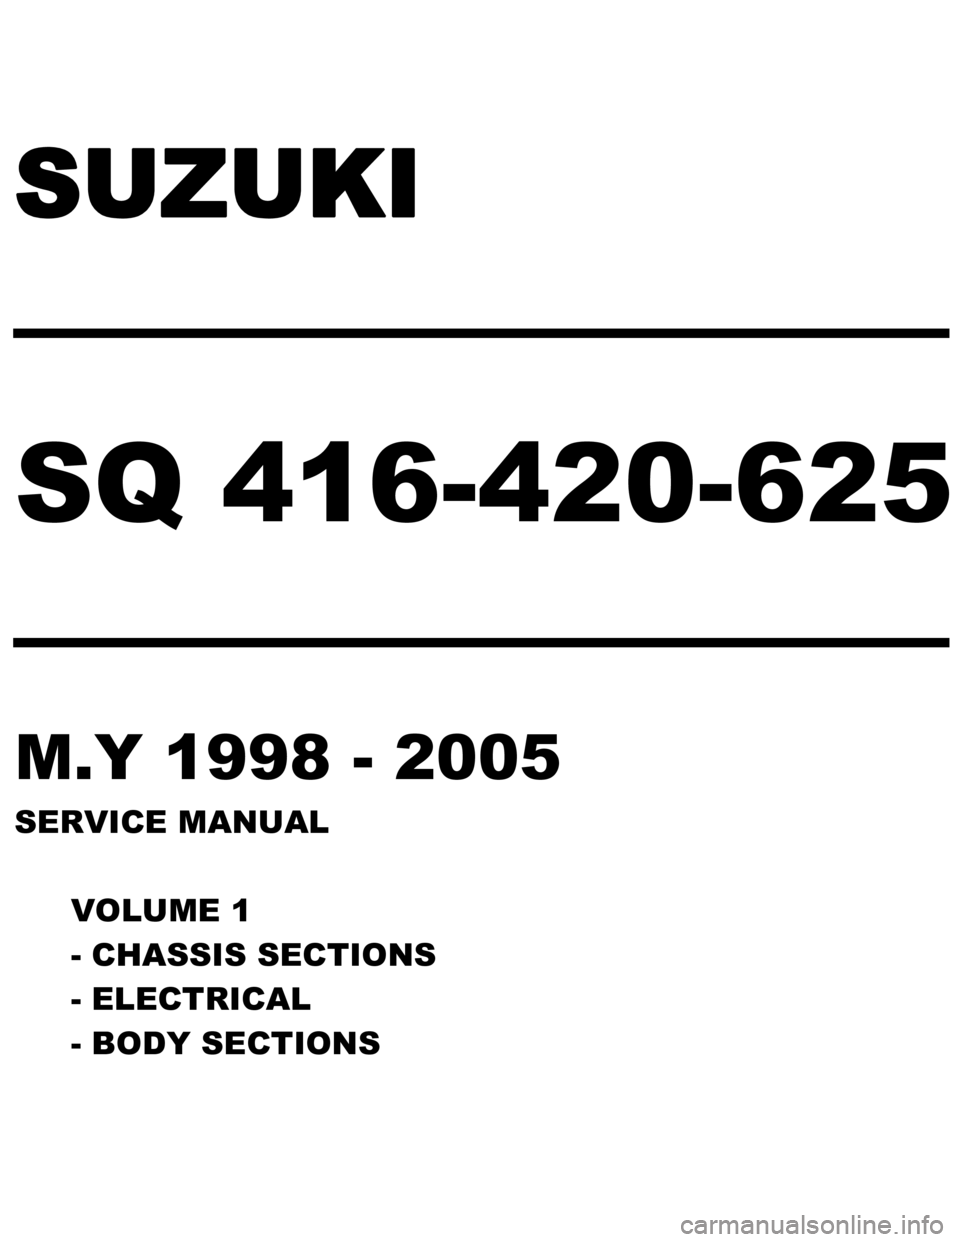 SUZUKI GRAND VITARA 2004 2.G Service Workshop Manual 
SUZUKI  
──────────── 
SQ 416-420-625 
──────────── 
M.Y 1998 - 2005 
SERVICE MANUAL   
VOLUME 1 
- CHASSIS SECTIONS 
- ELECTRICAL 
- BODY SECTIONS  